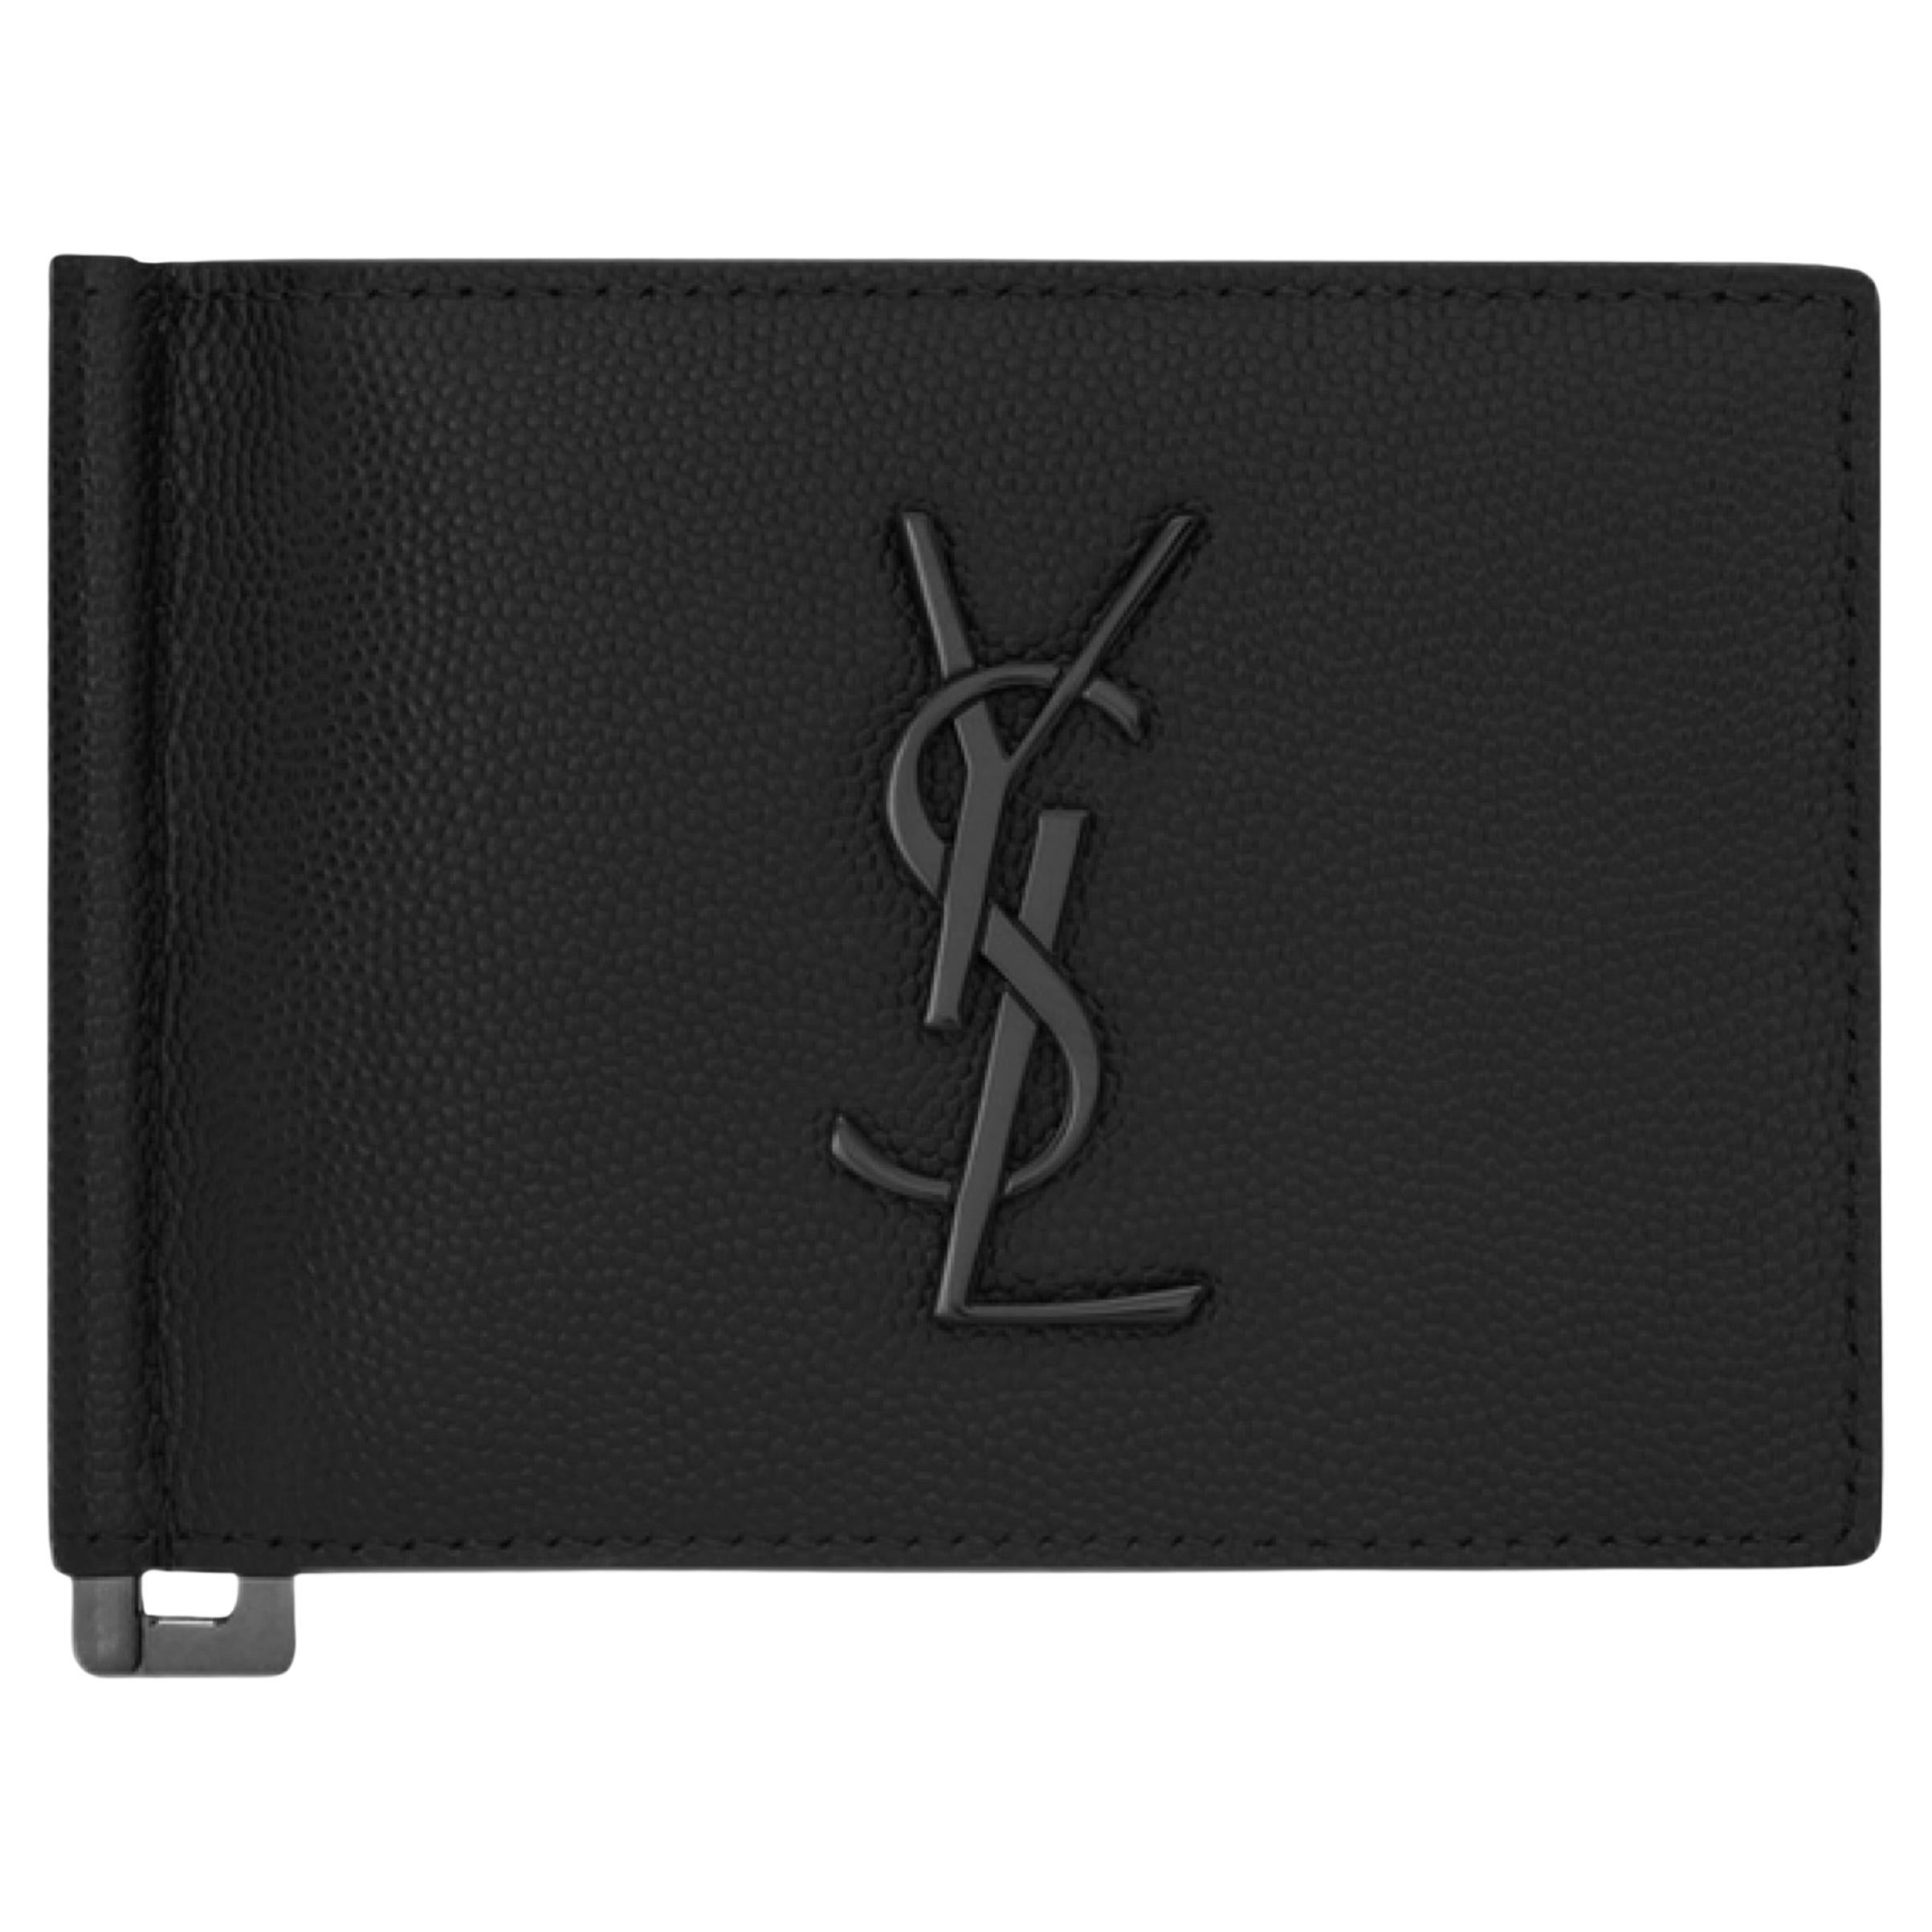 Saint Laurent YSL Bill Clip Wallet - Black for Men